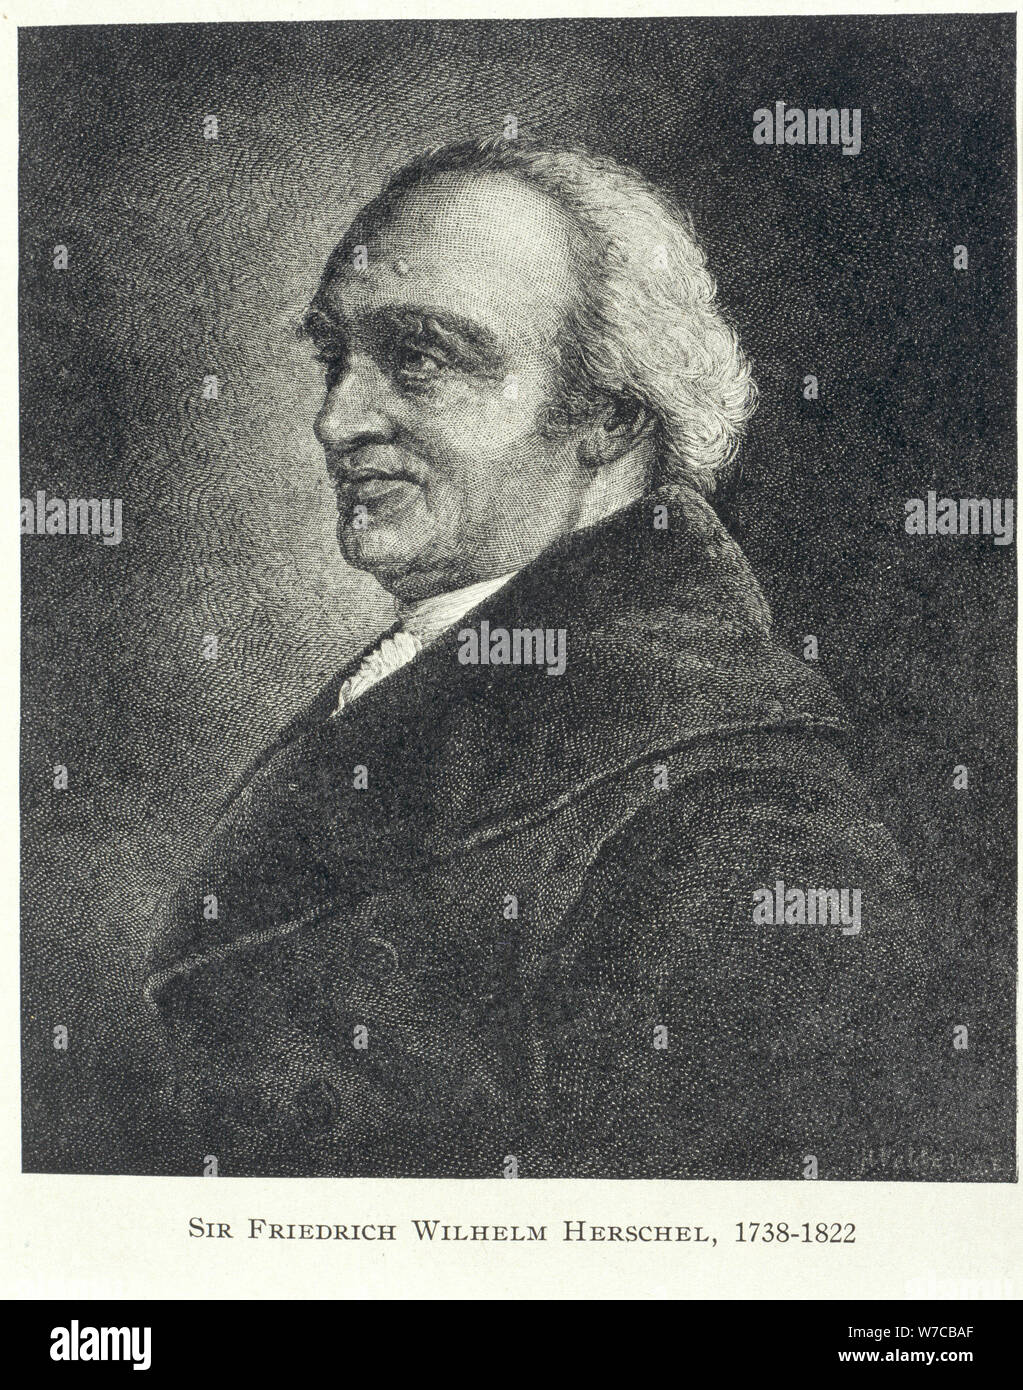 Sir Frederick William Herschel, 1800. Artista: Desconocido Foto de stock